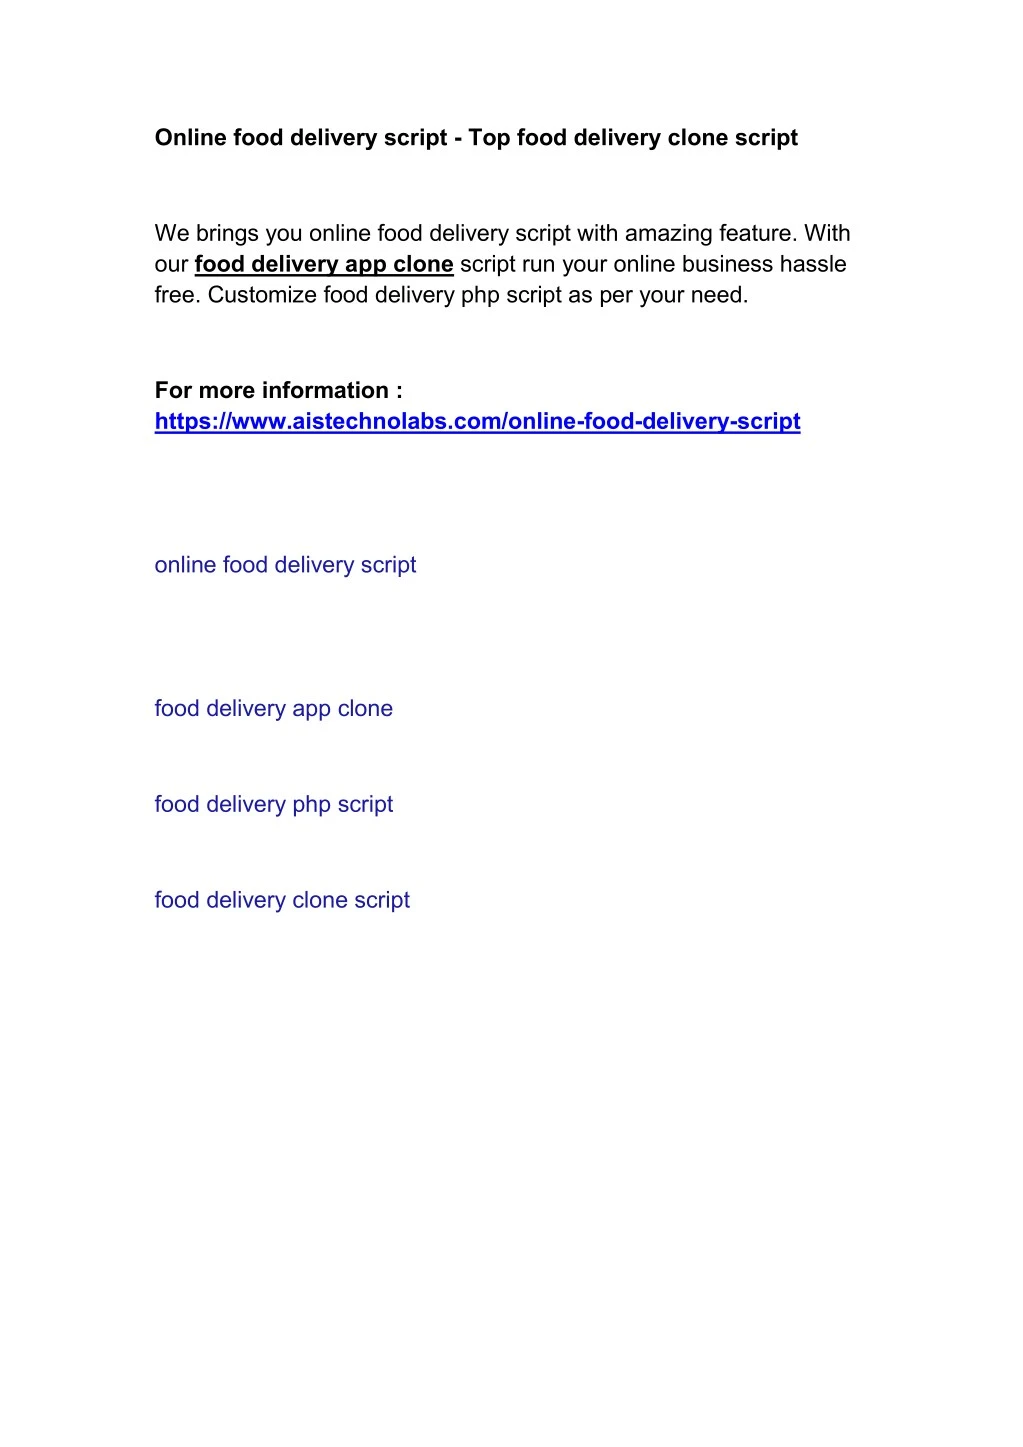 online food delivery script top food delivery